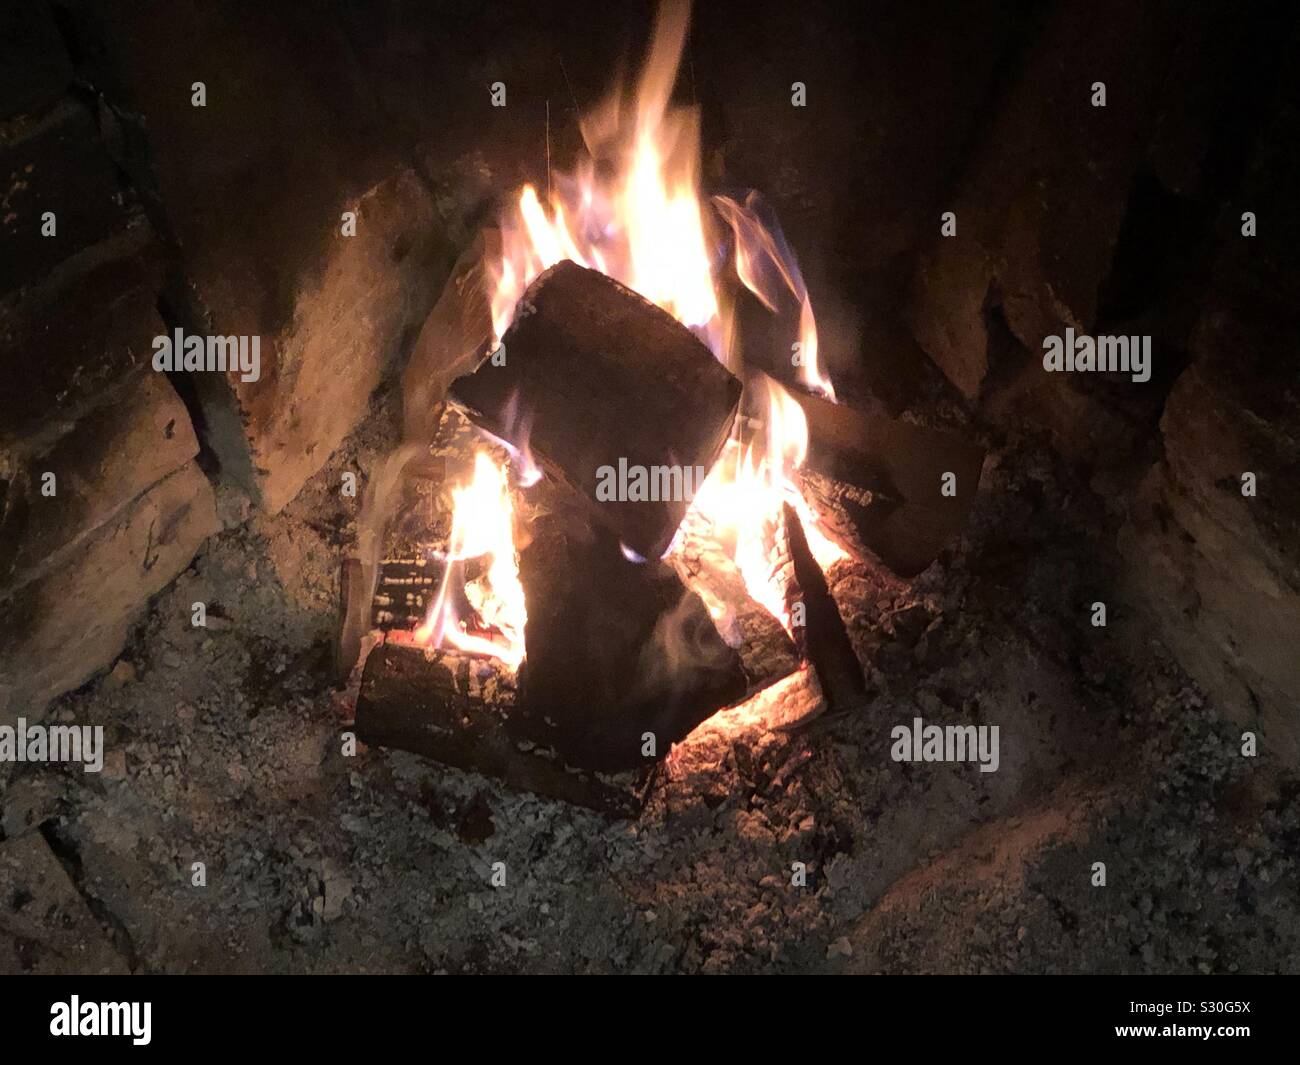 A roaring open log fire in a hearth in winter. Stock Photo